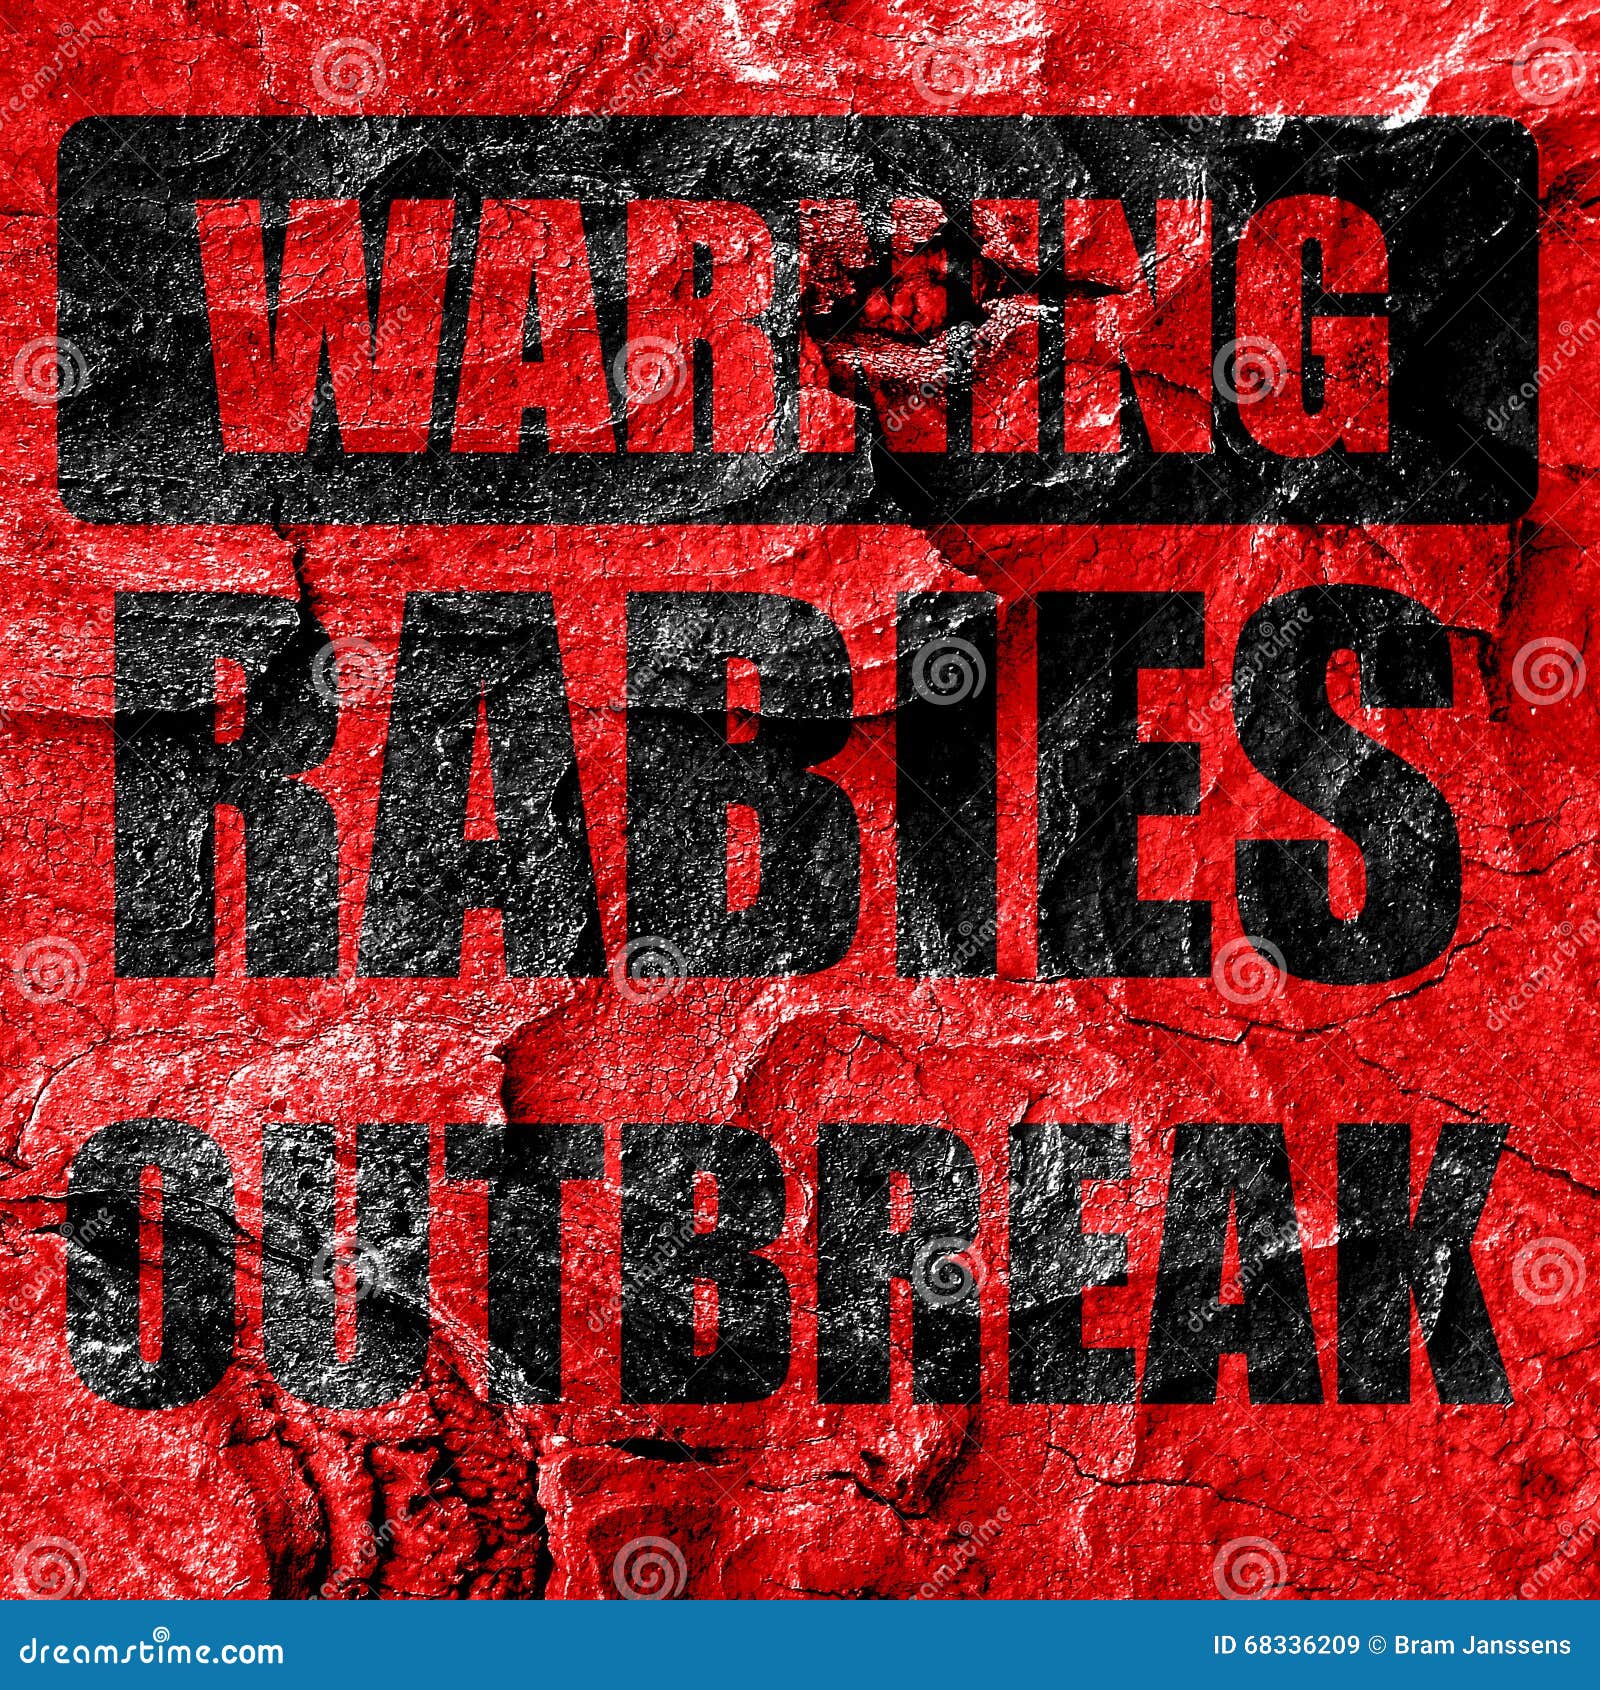 rabies virus concept background